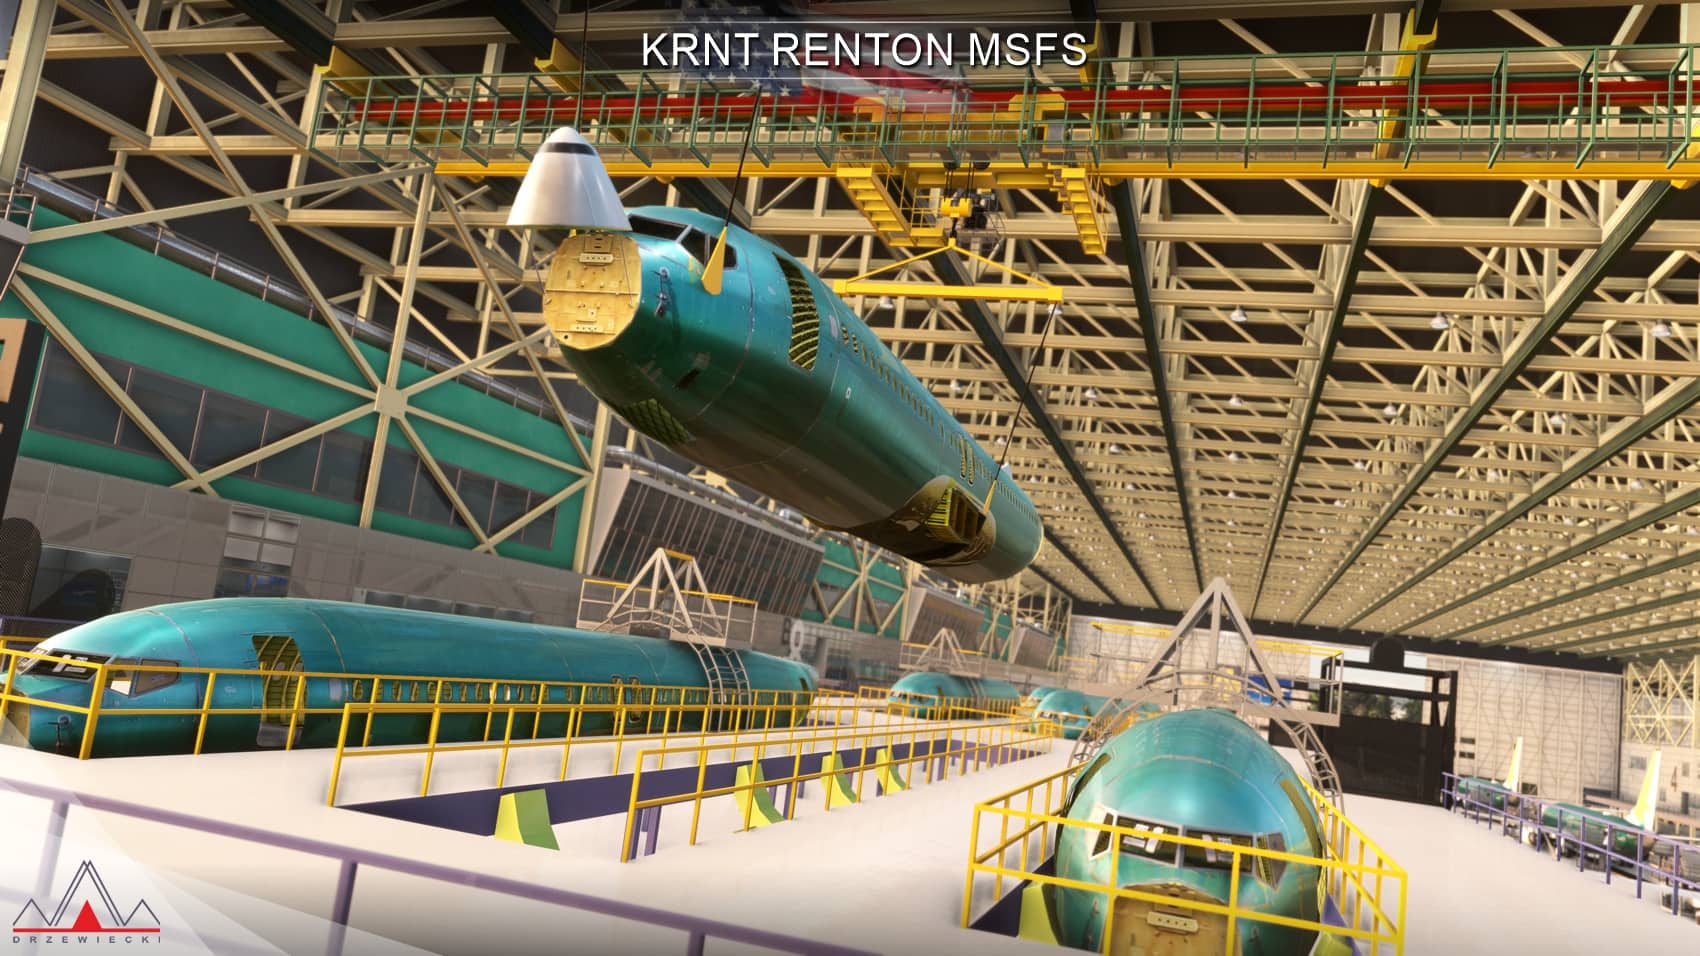 Drzewiecki Design Releases Renton for MSFS - Drzewiecki Design, Microsoft Flight Simulator